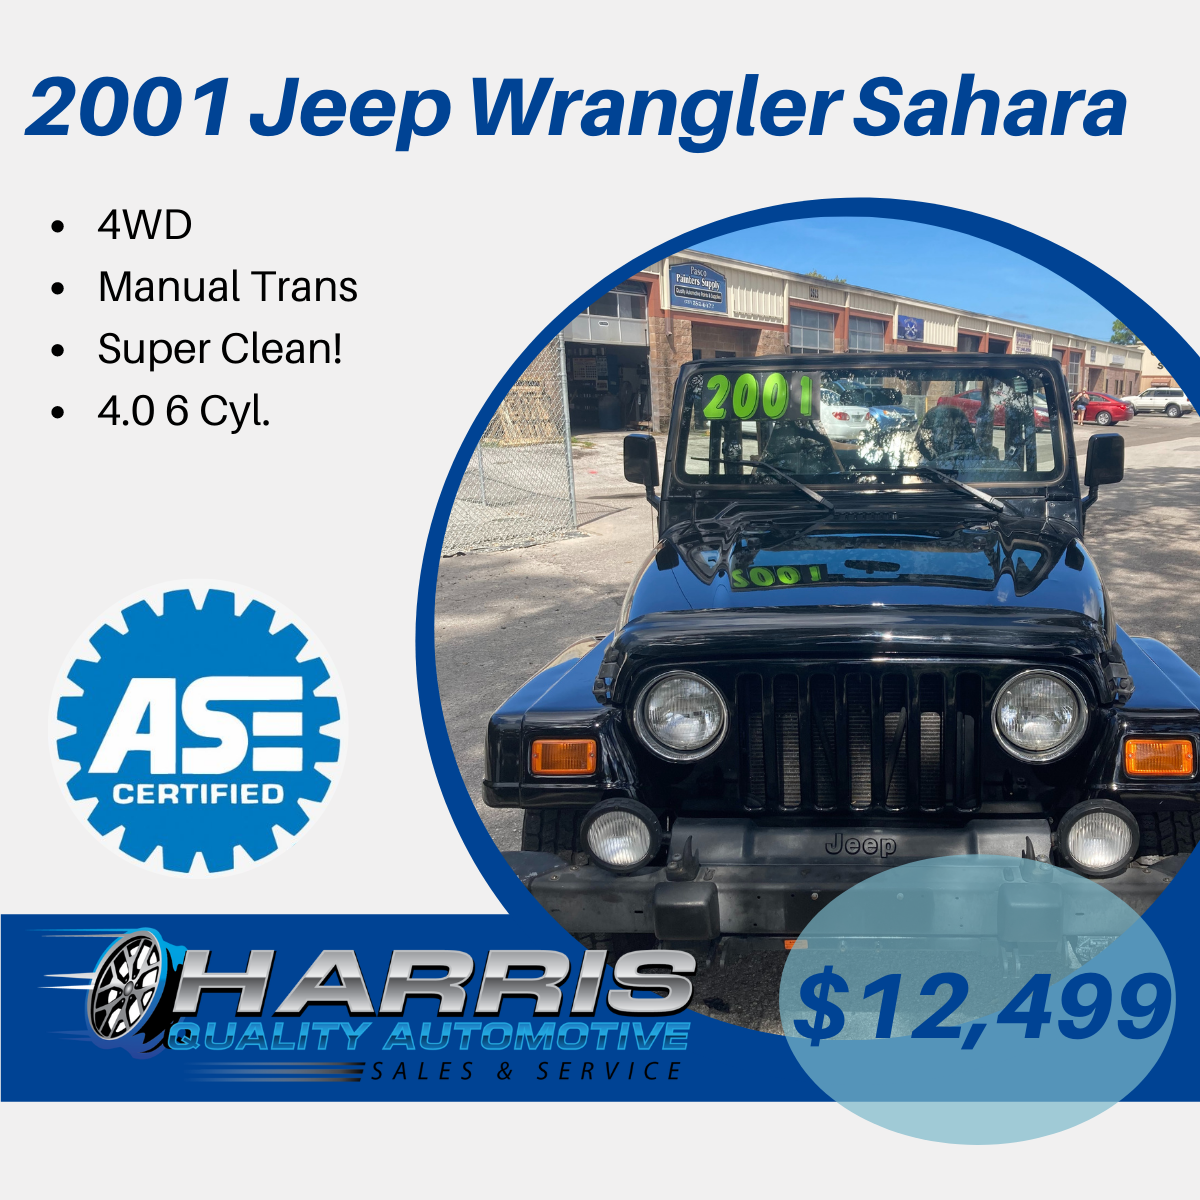 2001 Jeep Wrangler Sahara - Harris Quality Automotive